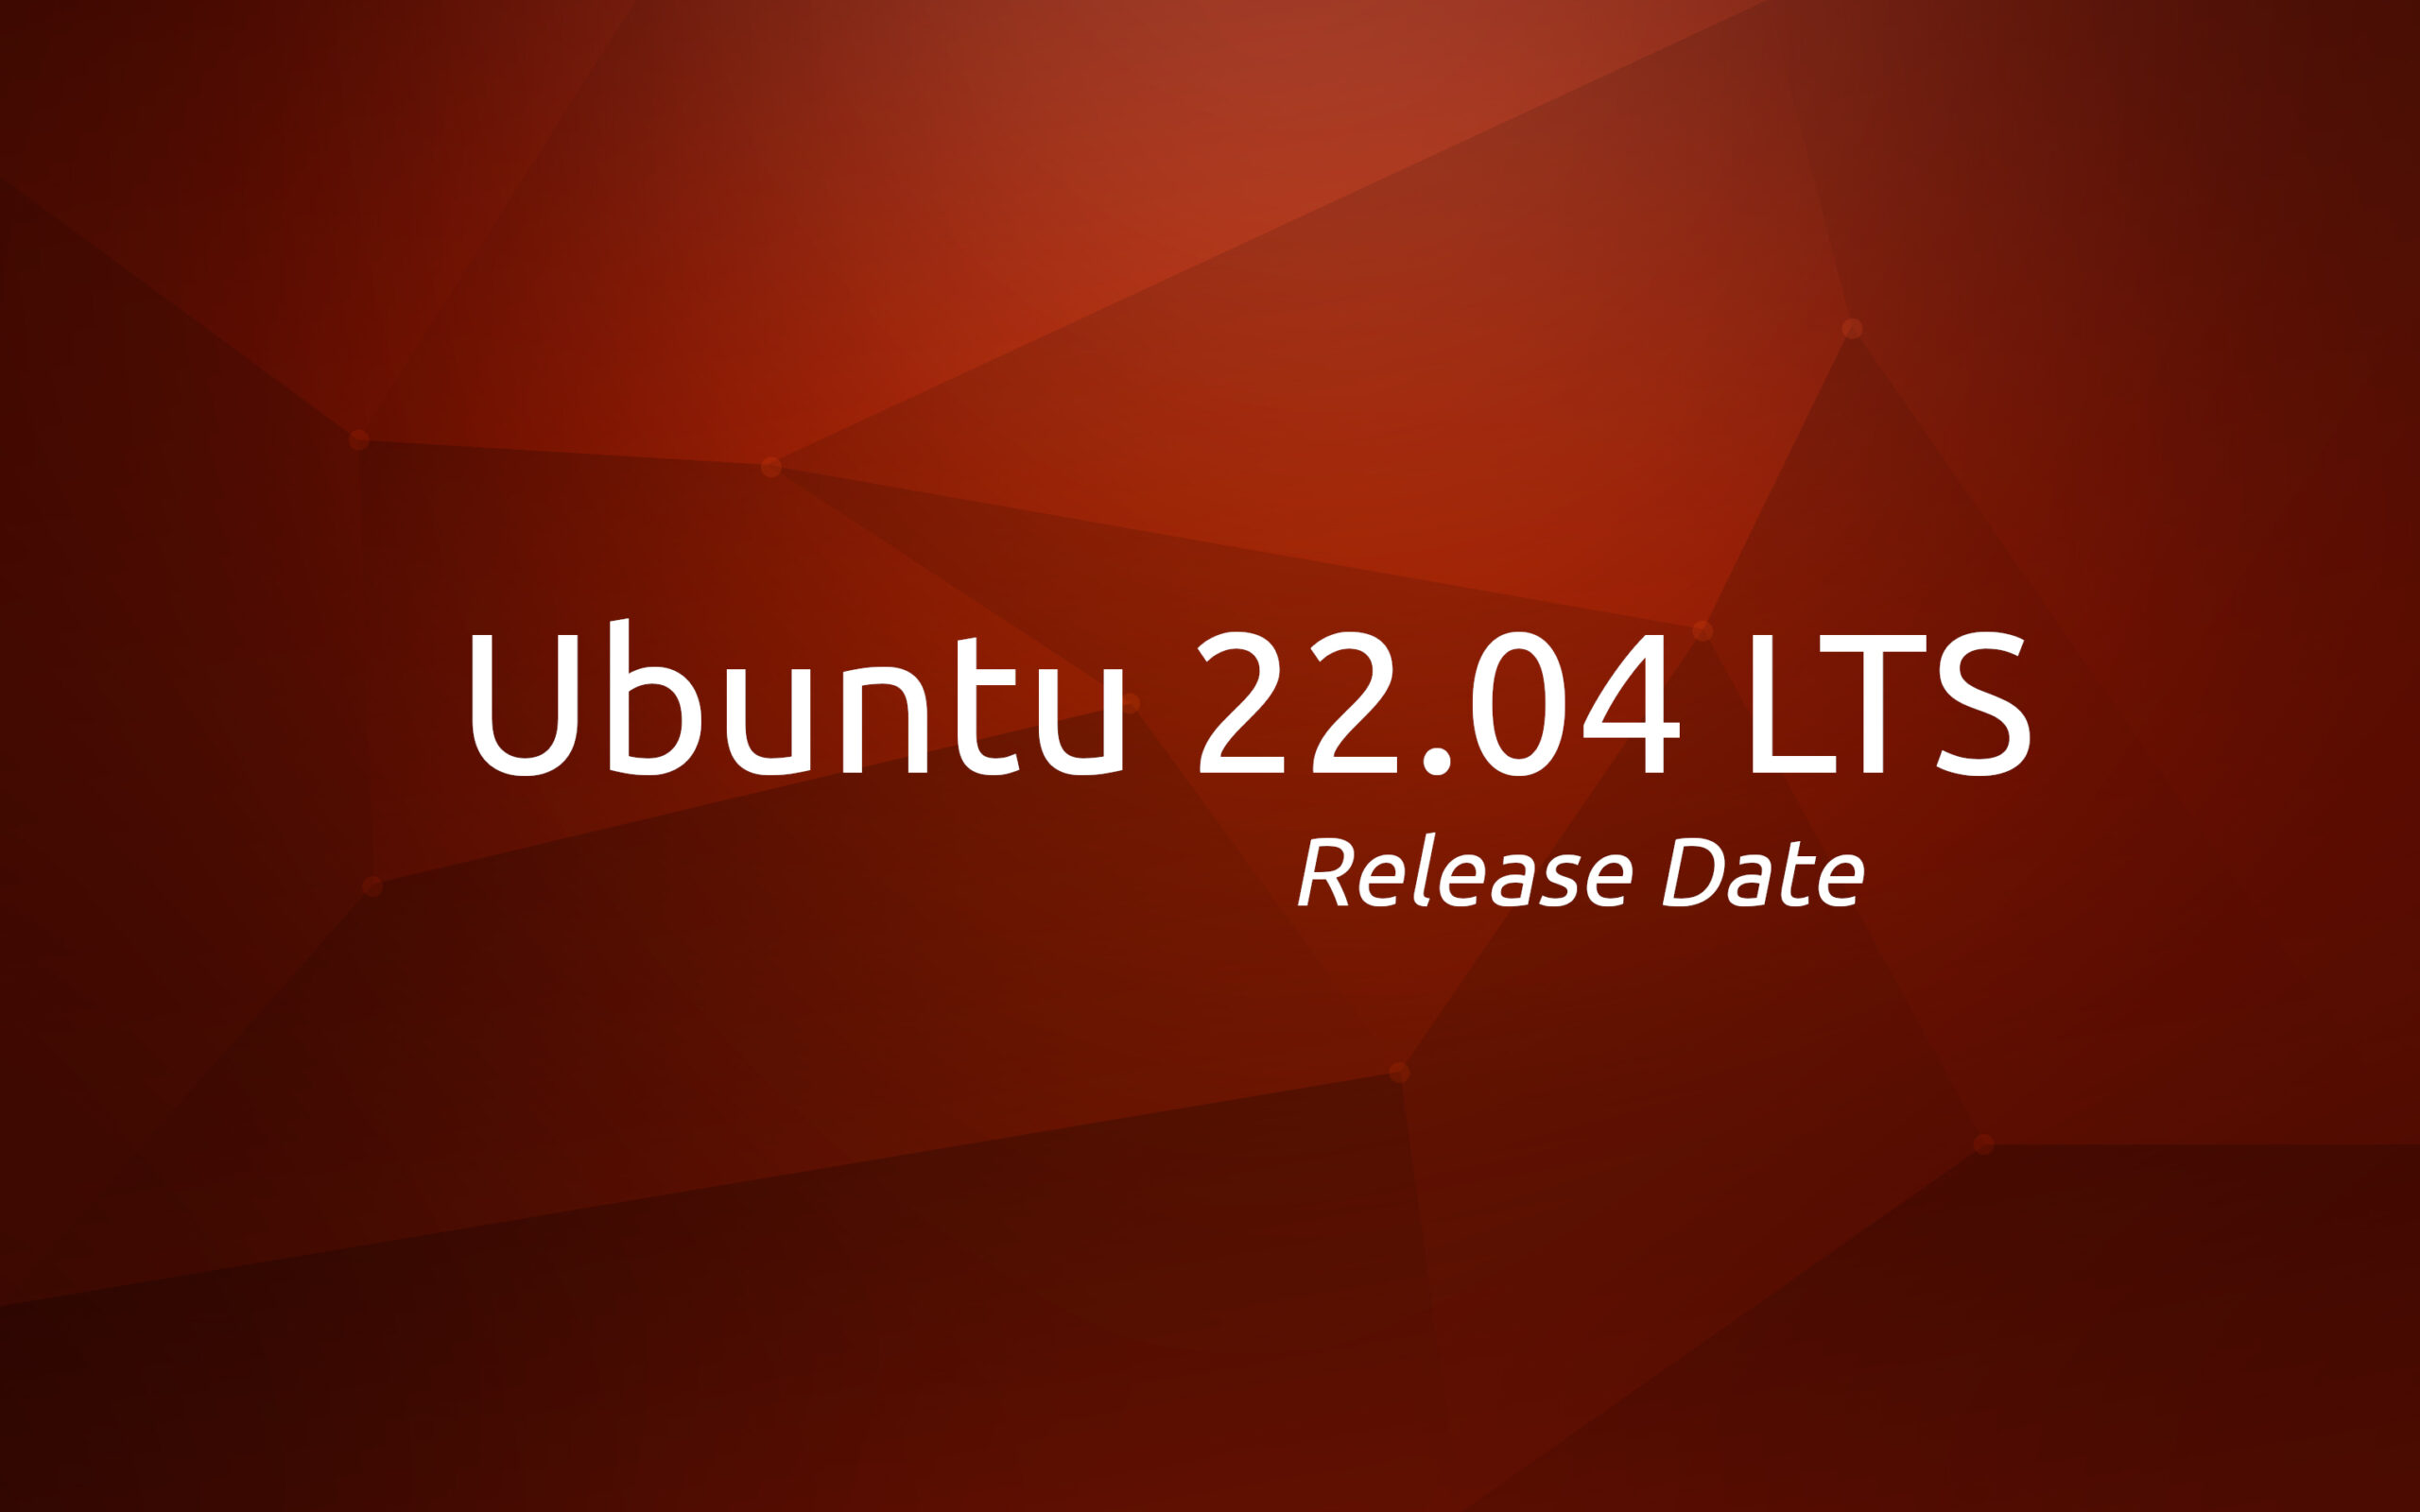 Ubuntu 22.04 LTS Slated for Release on April 21st, 2022